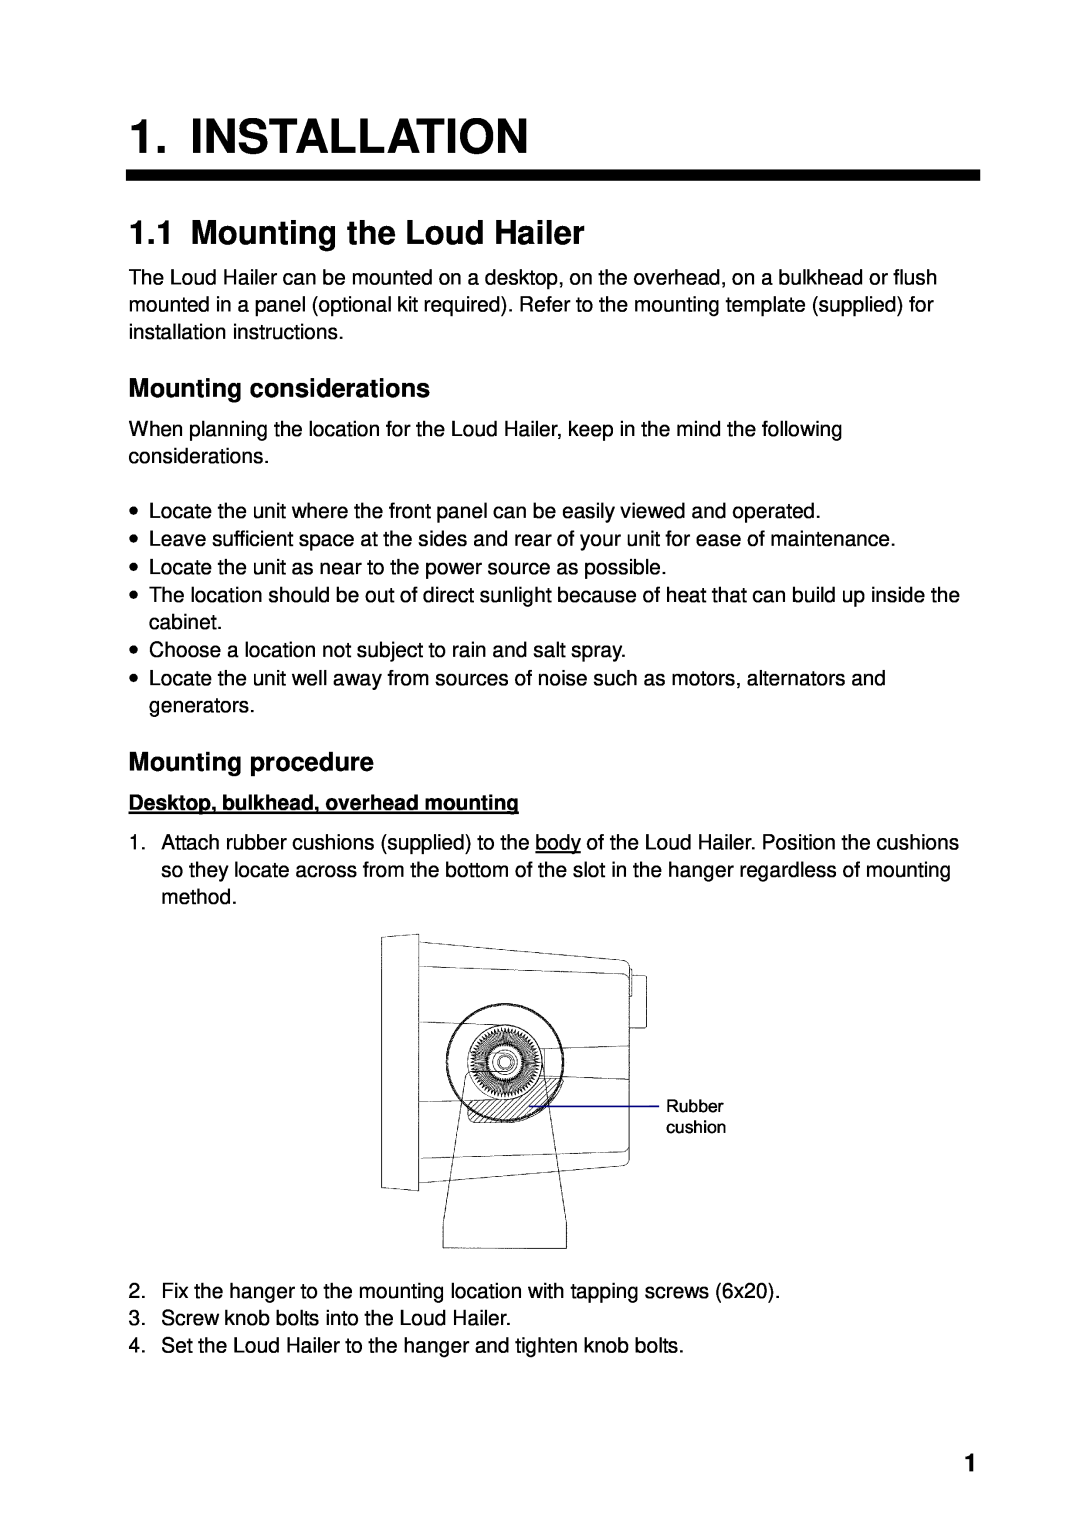 Furuno LH-3000 manual Installation, Mounting the Loud Hailer, Mounting considerations, Mounting procedure 